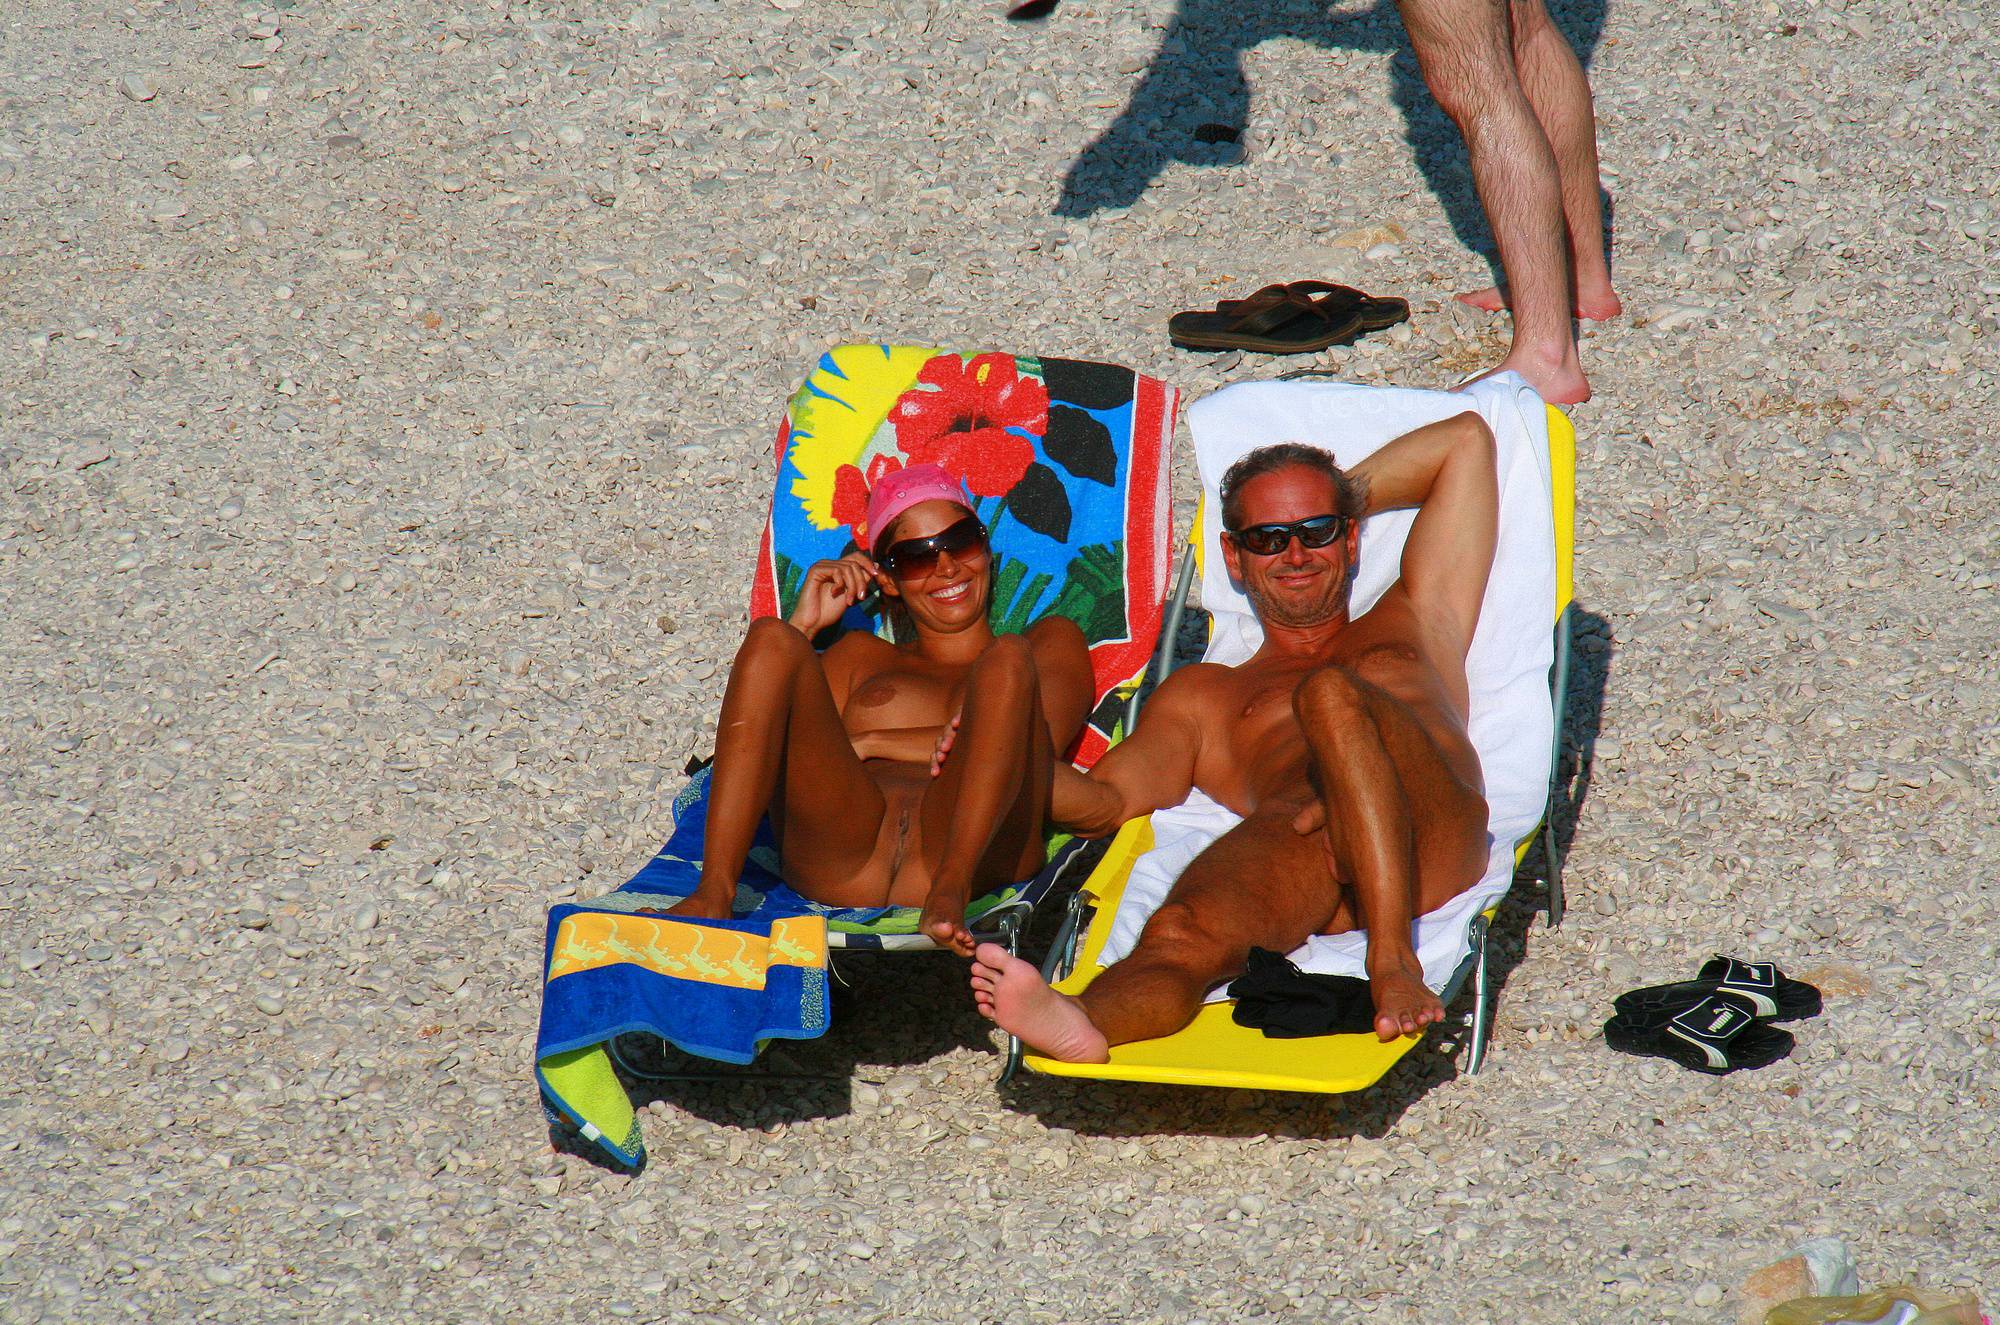 Ula FKK Striped Tan Couple - Young Nudists - 1